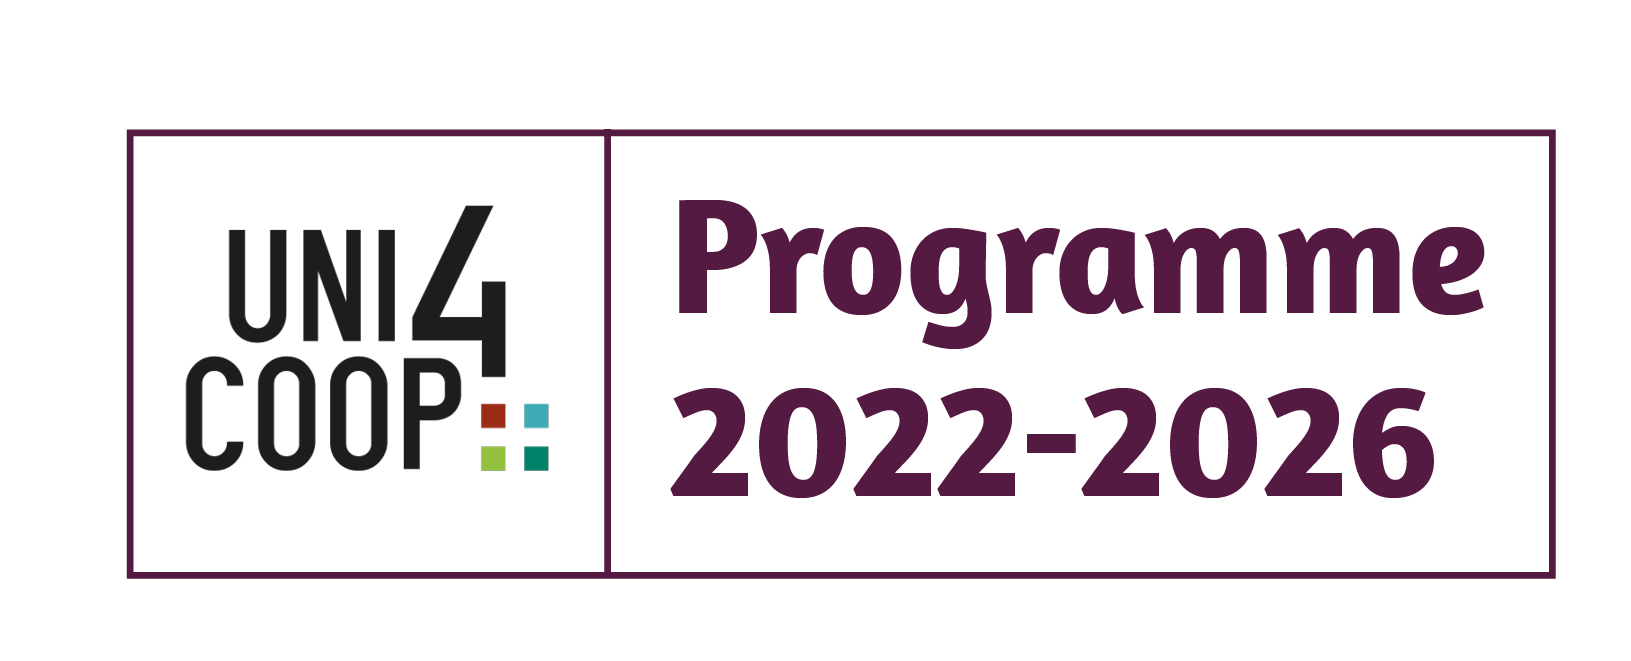 Programme 2022-2026 Uni4Coop